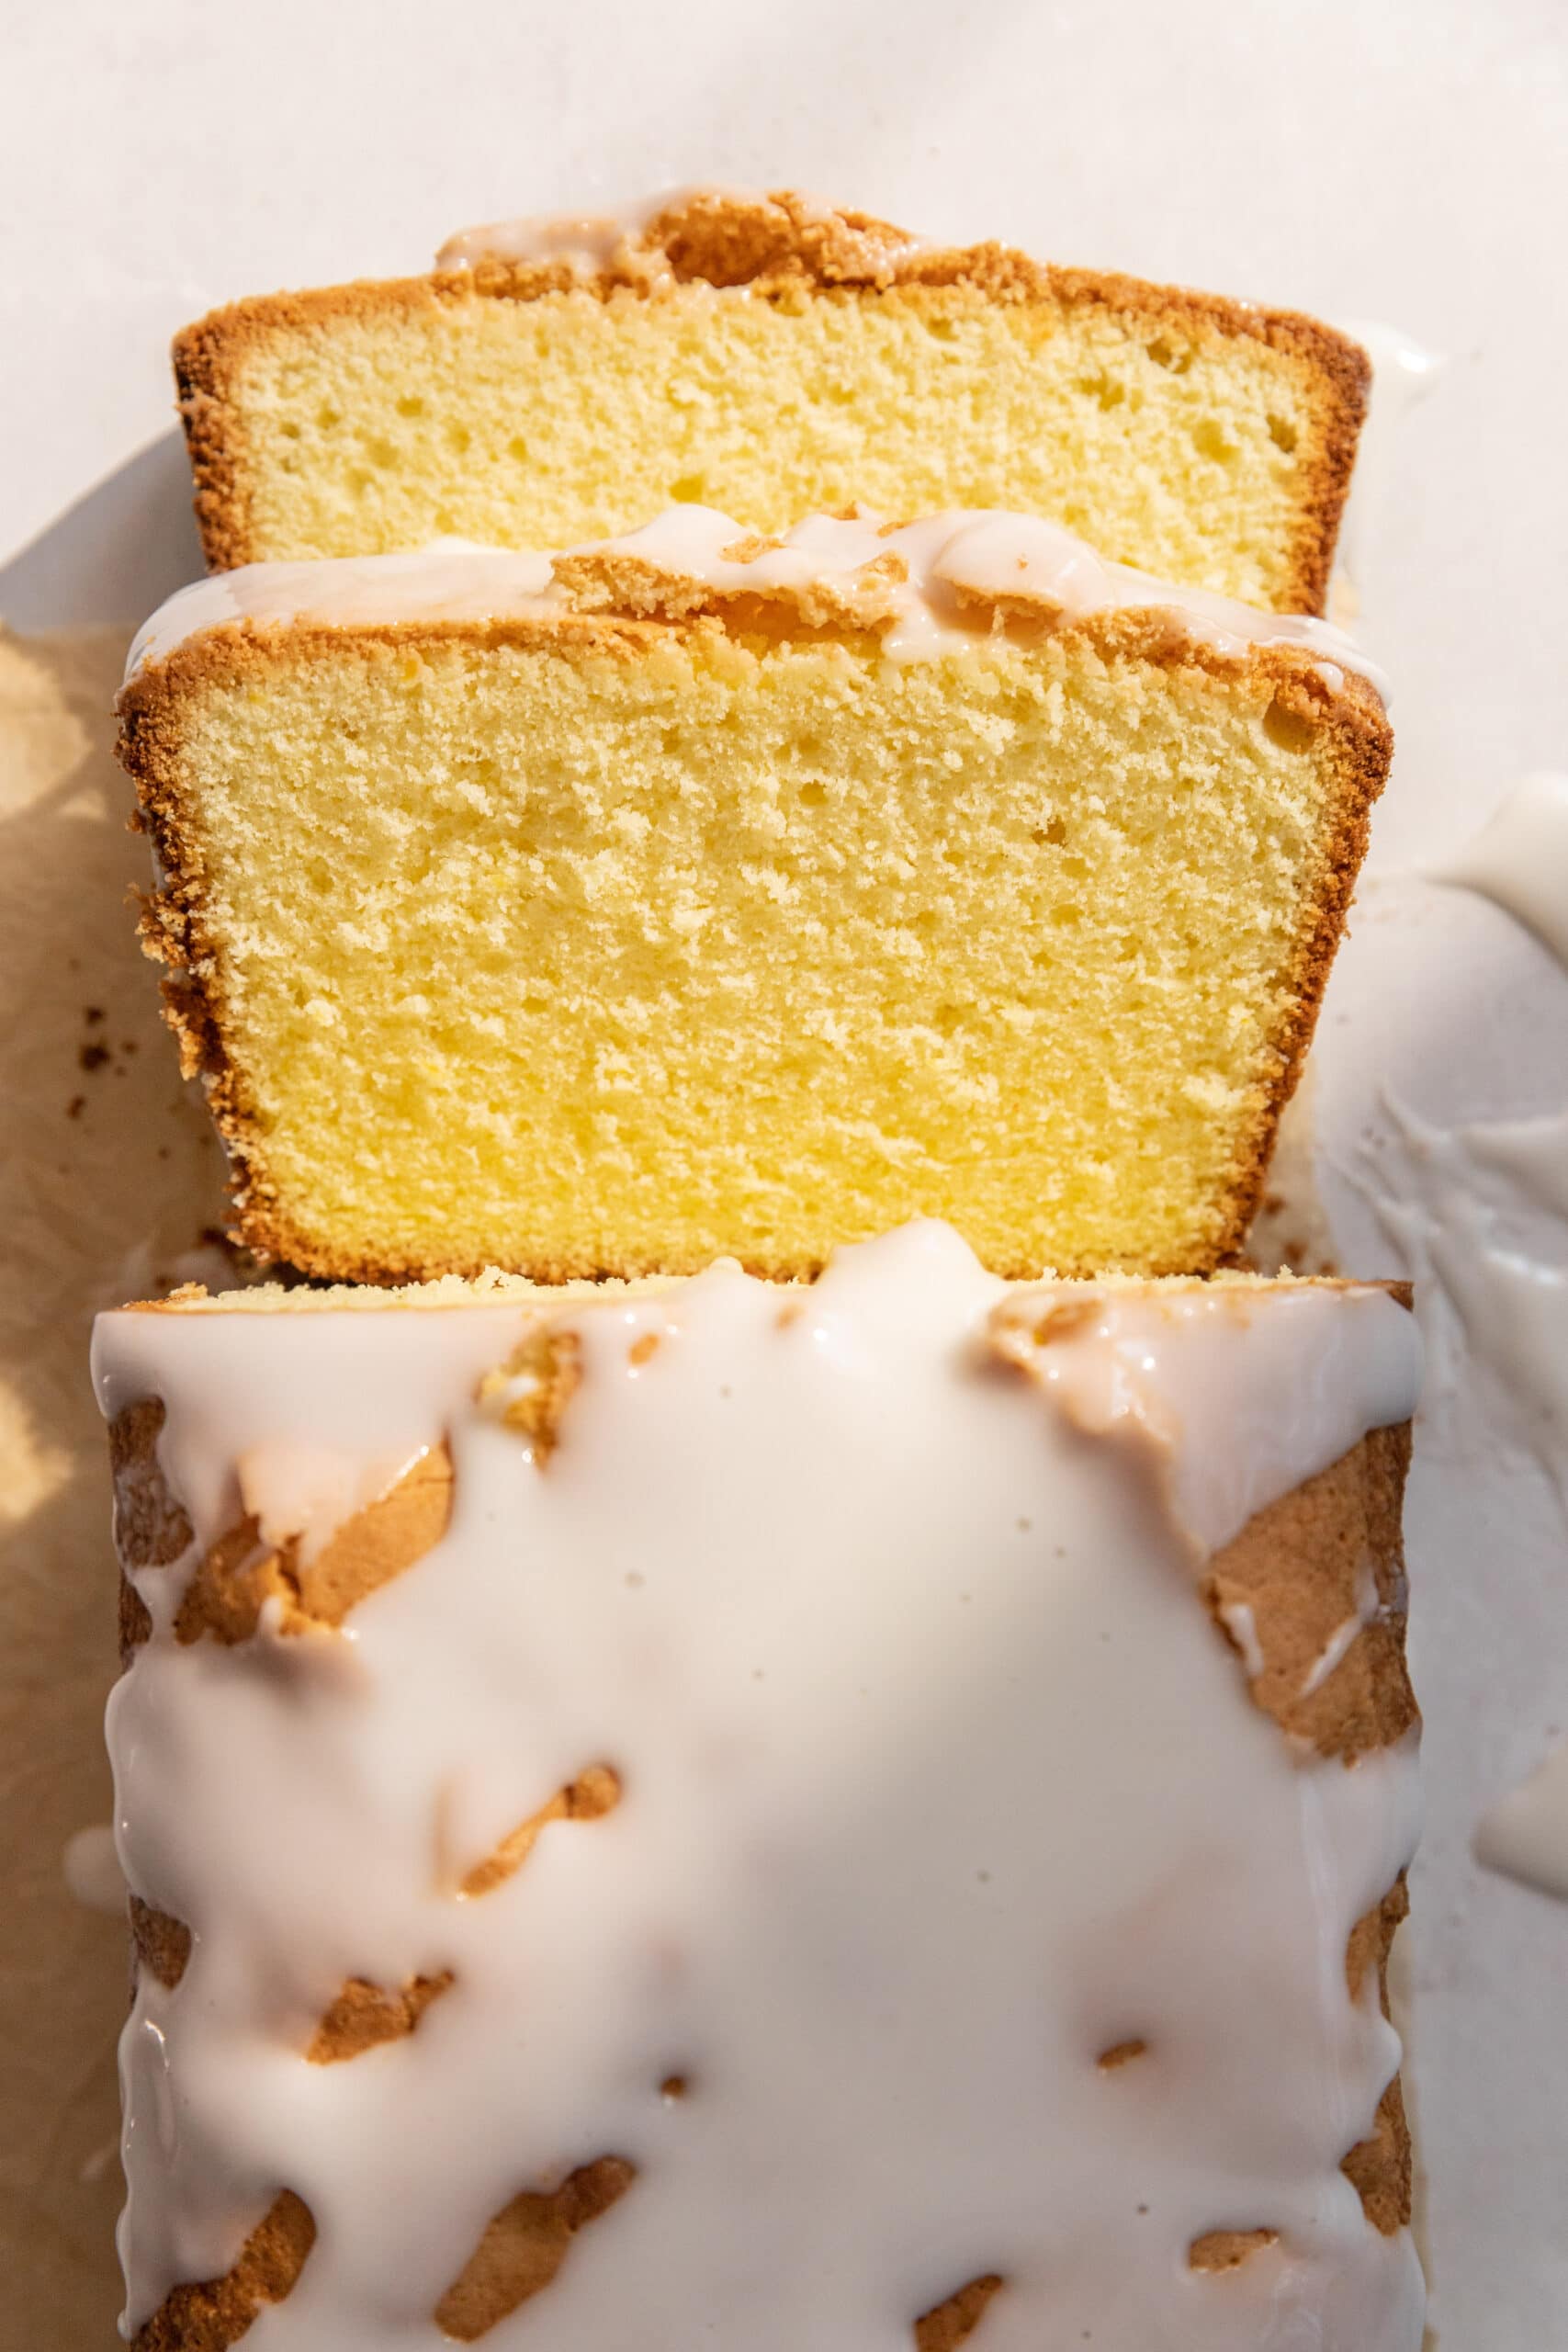 Lemon loaf cake with lemon glaze with 2 slices cut showing the tender crumb inside. 